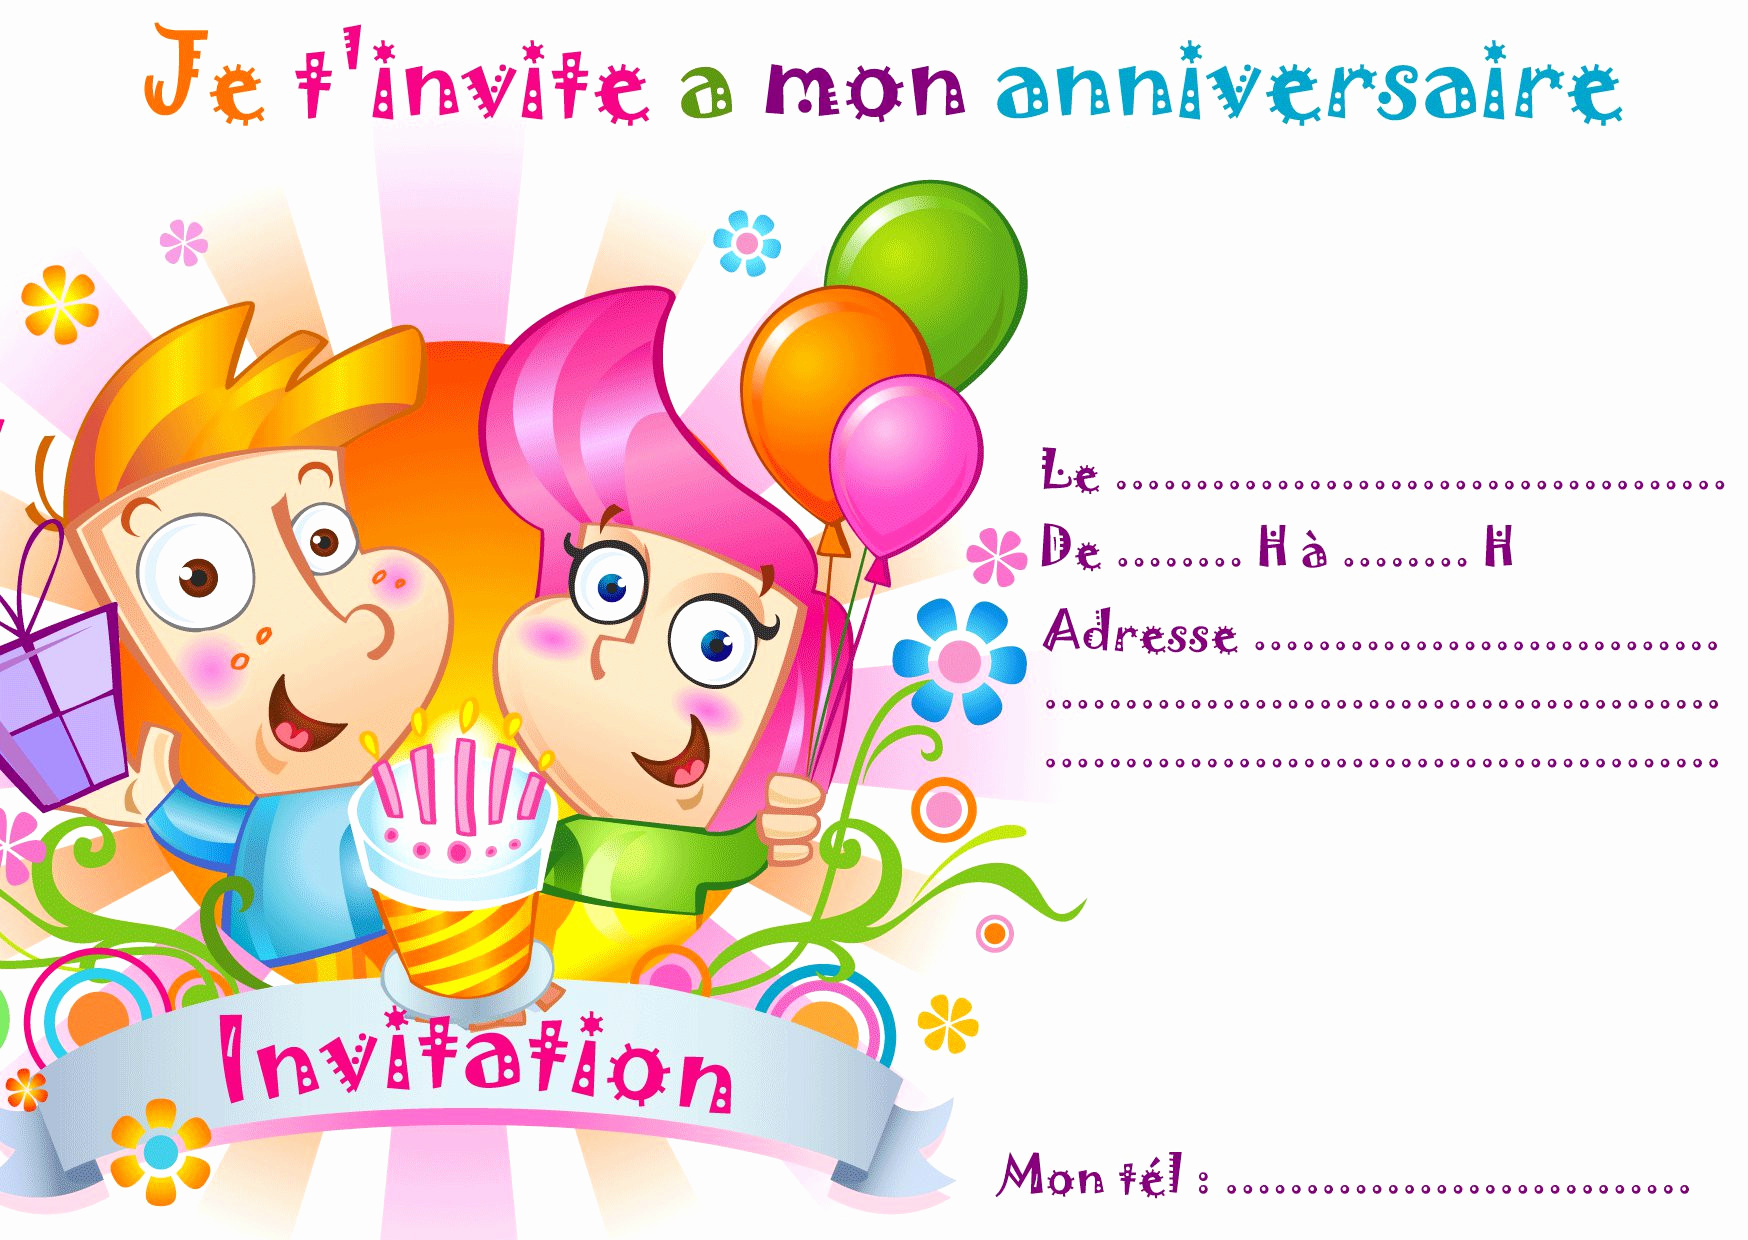 Creer carte invitation anniversaire virtuelle gratuite